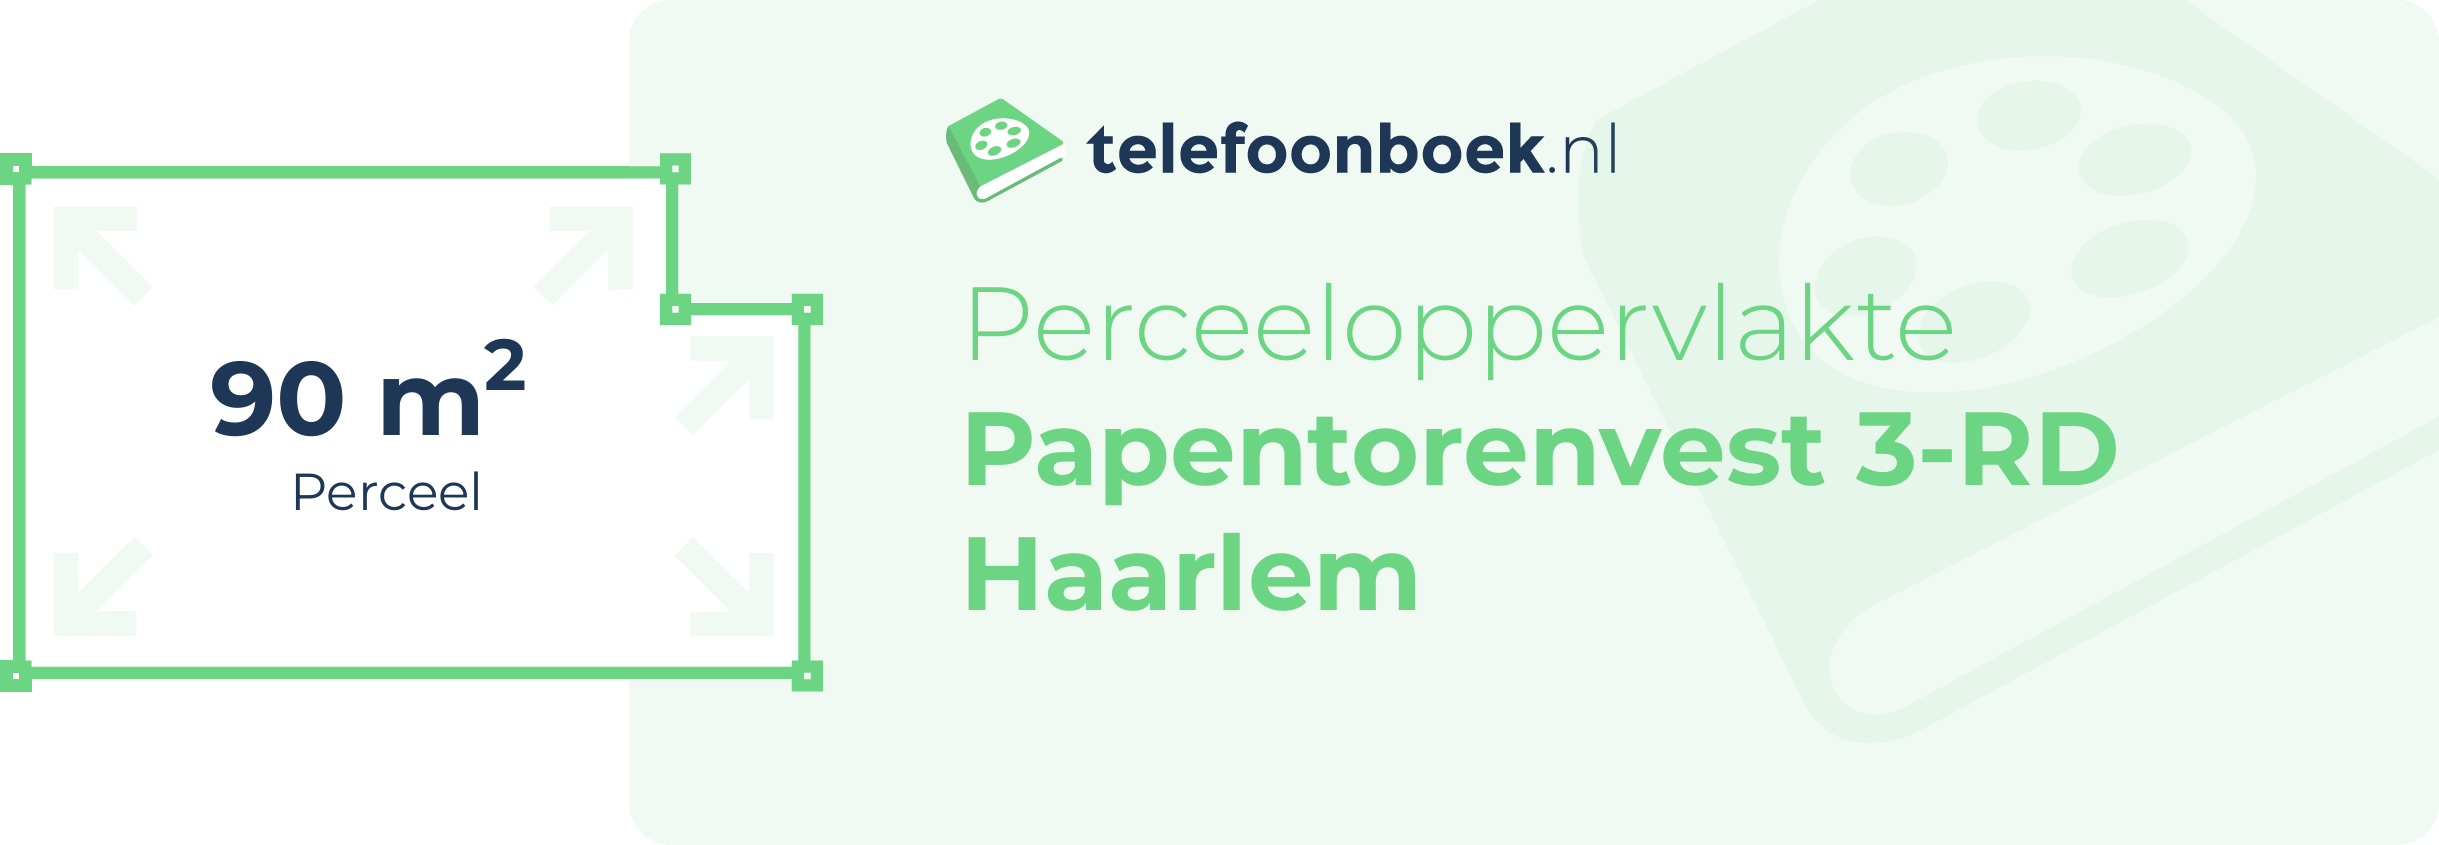 Perceeloppervlakte Papentorenvest 3-RD Haarlem